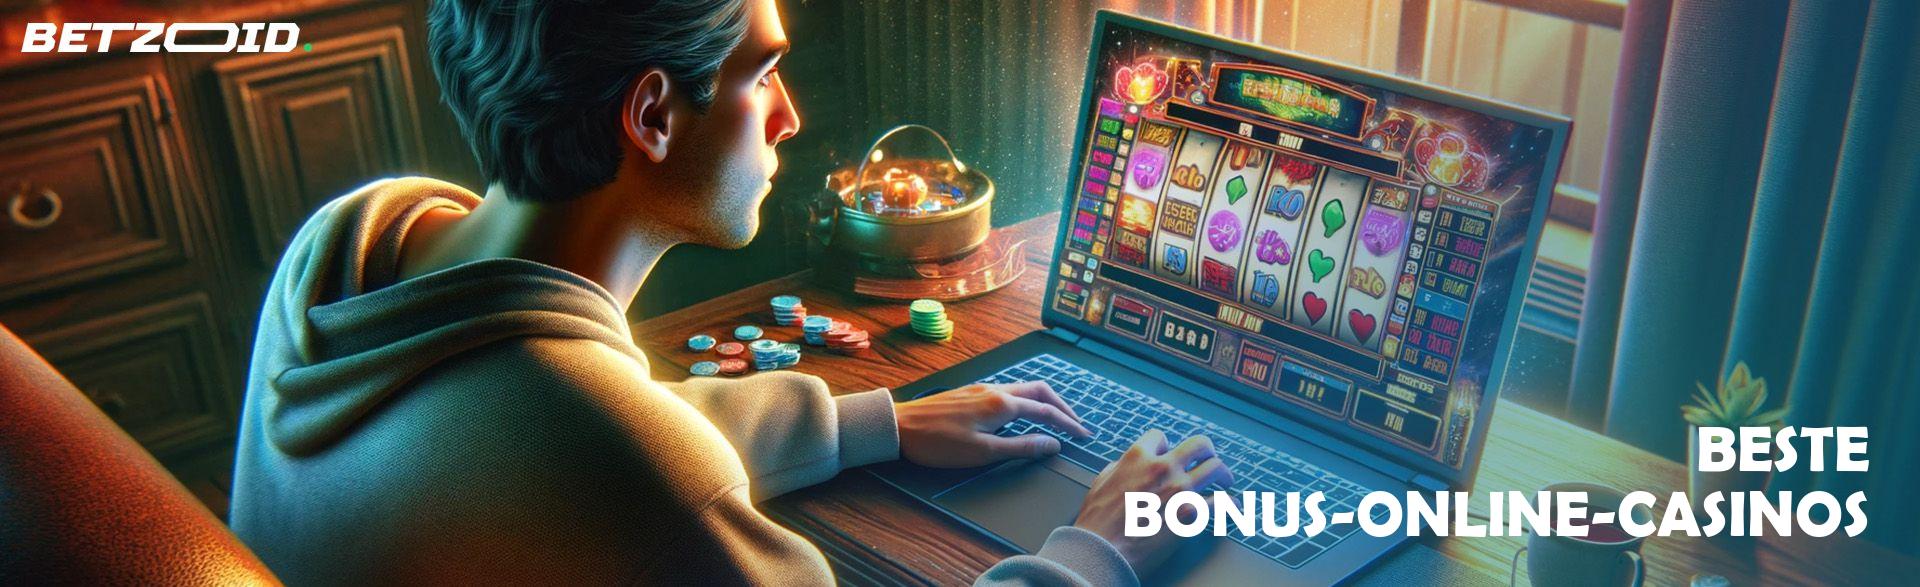 Beste Bonus-Online-Casinos.